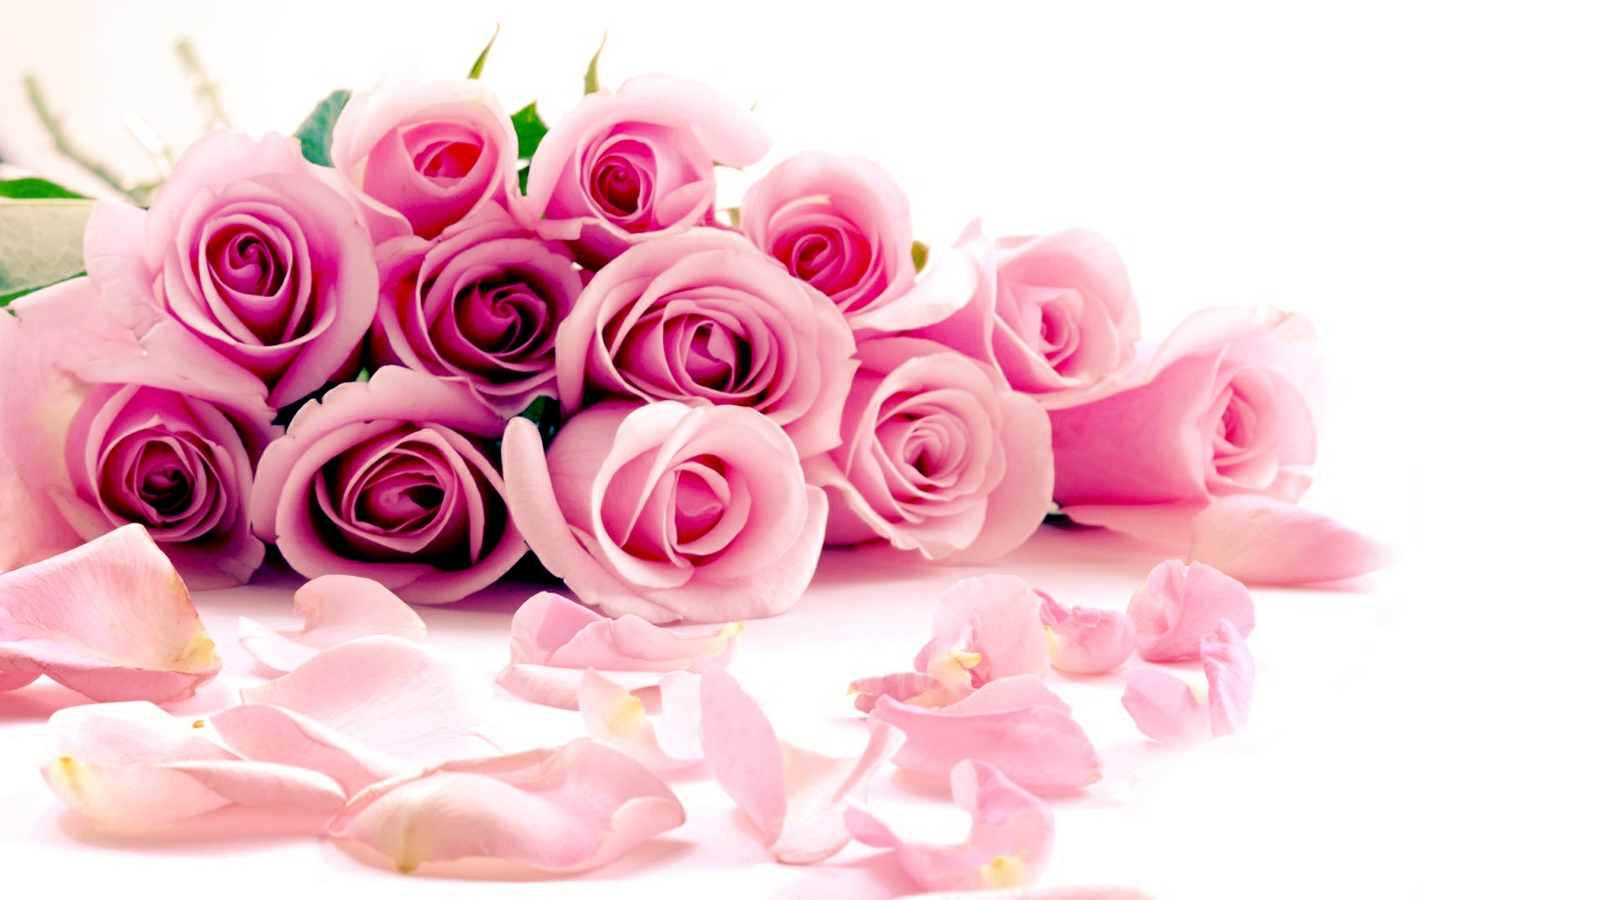 a-dozen-pink-roses-petals.jpg